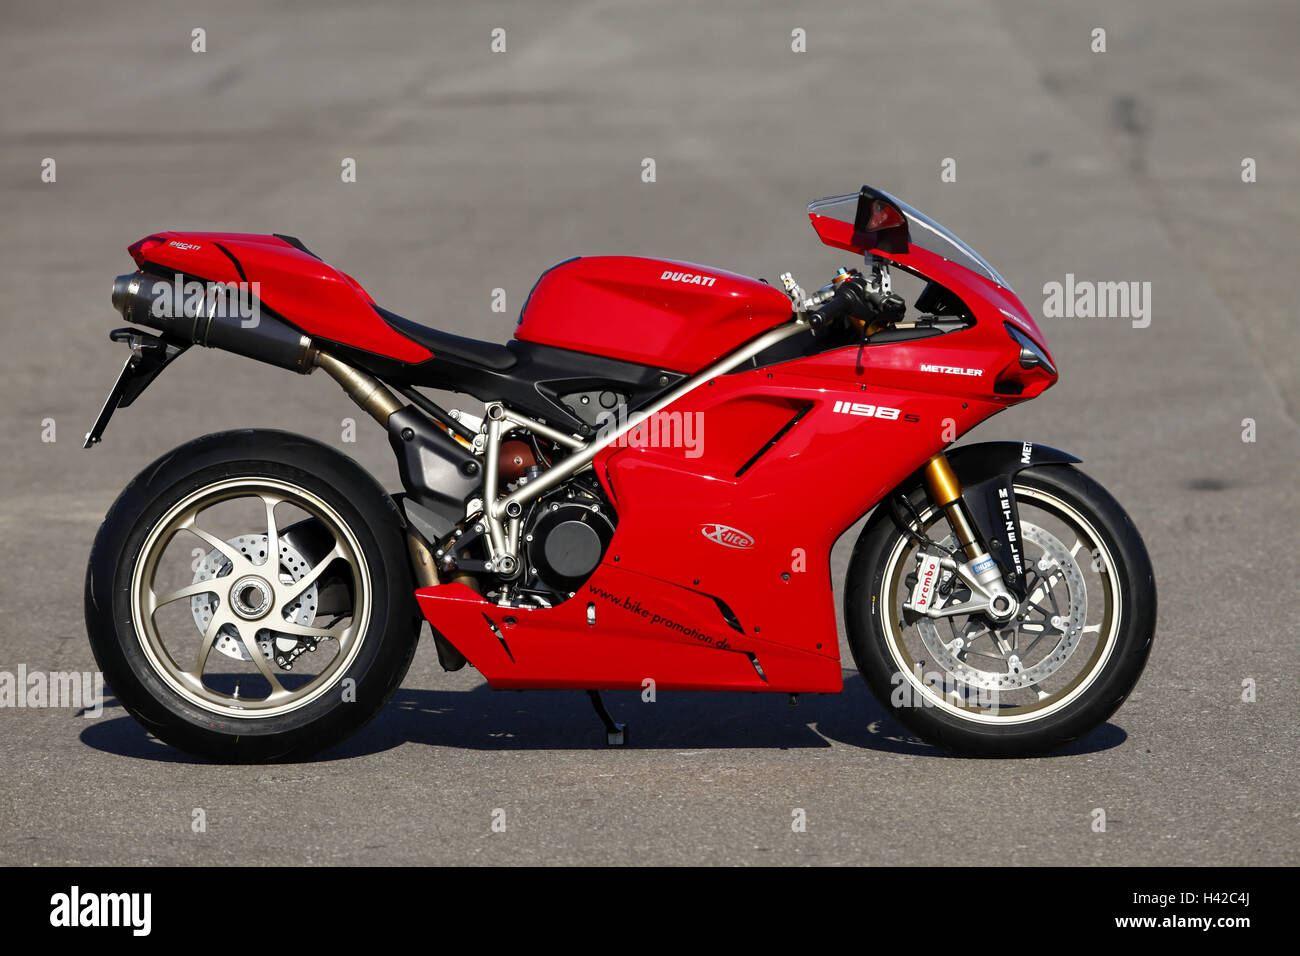 Ducati 1198see, keine Property-Release, Stockfoto